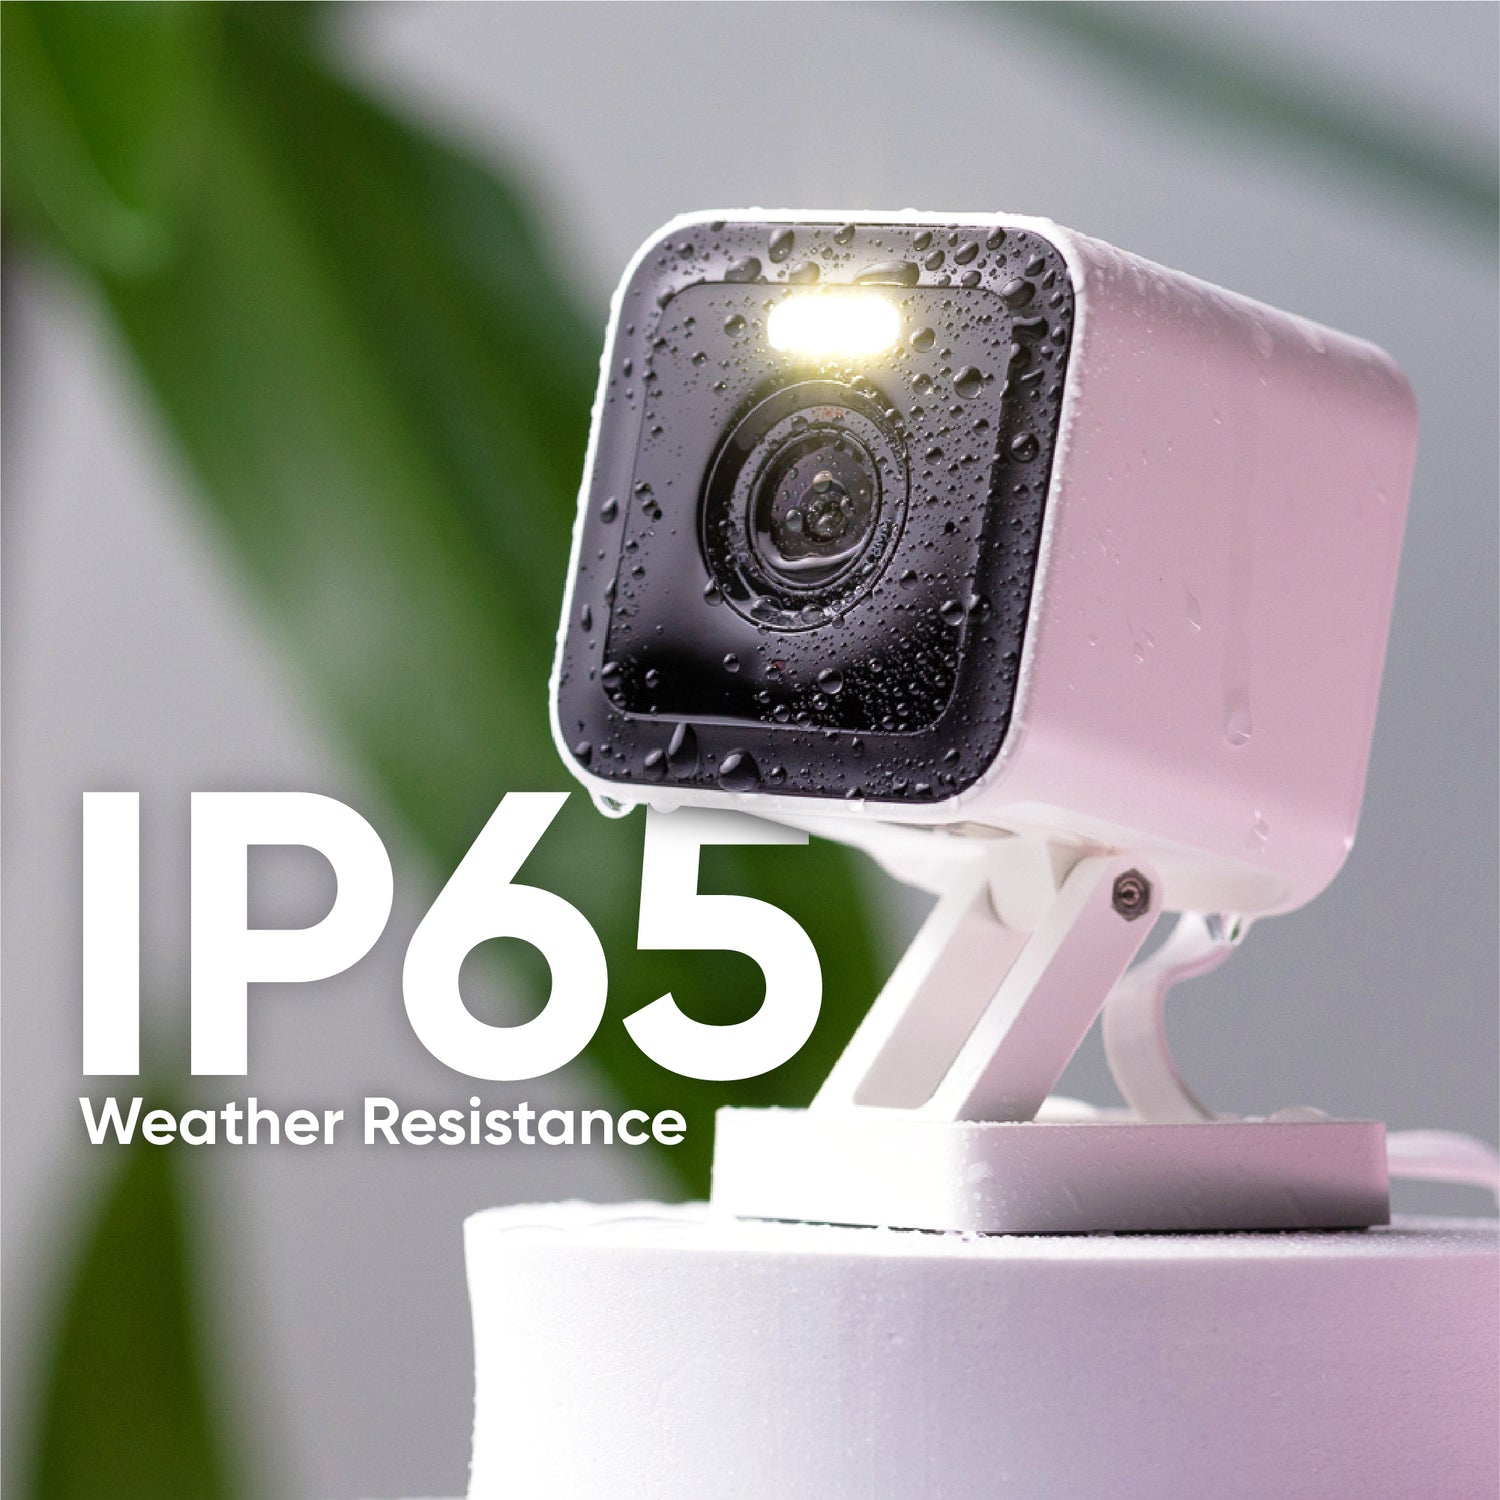 v3 pro all wet for IP65 weather resistance